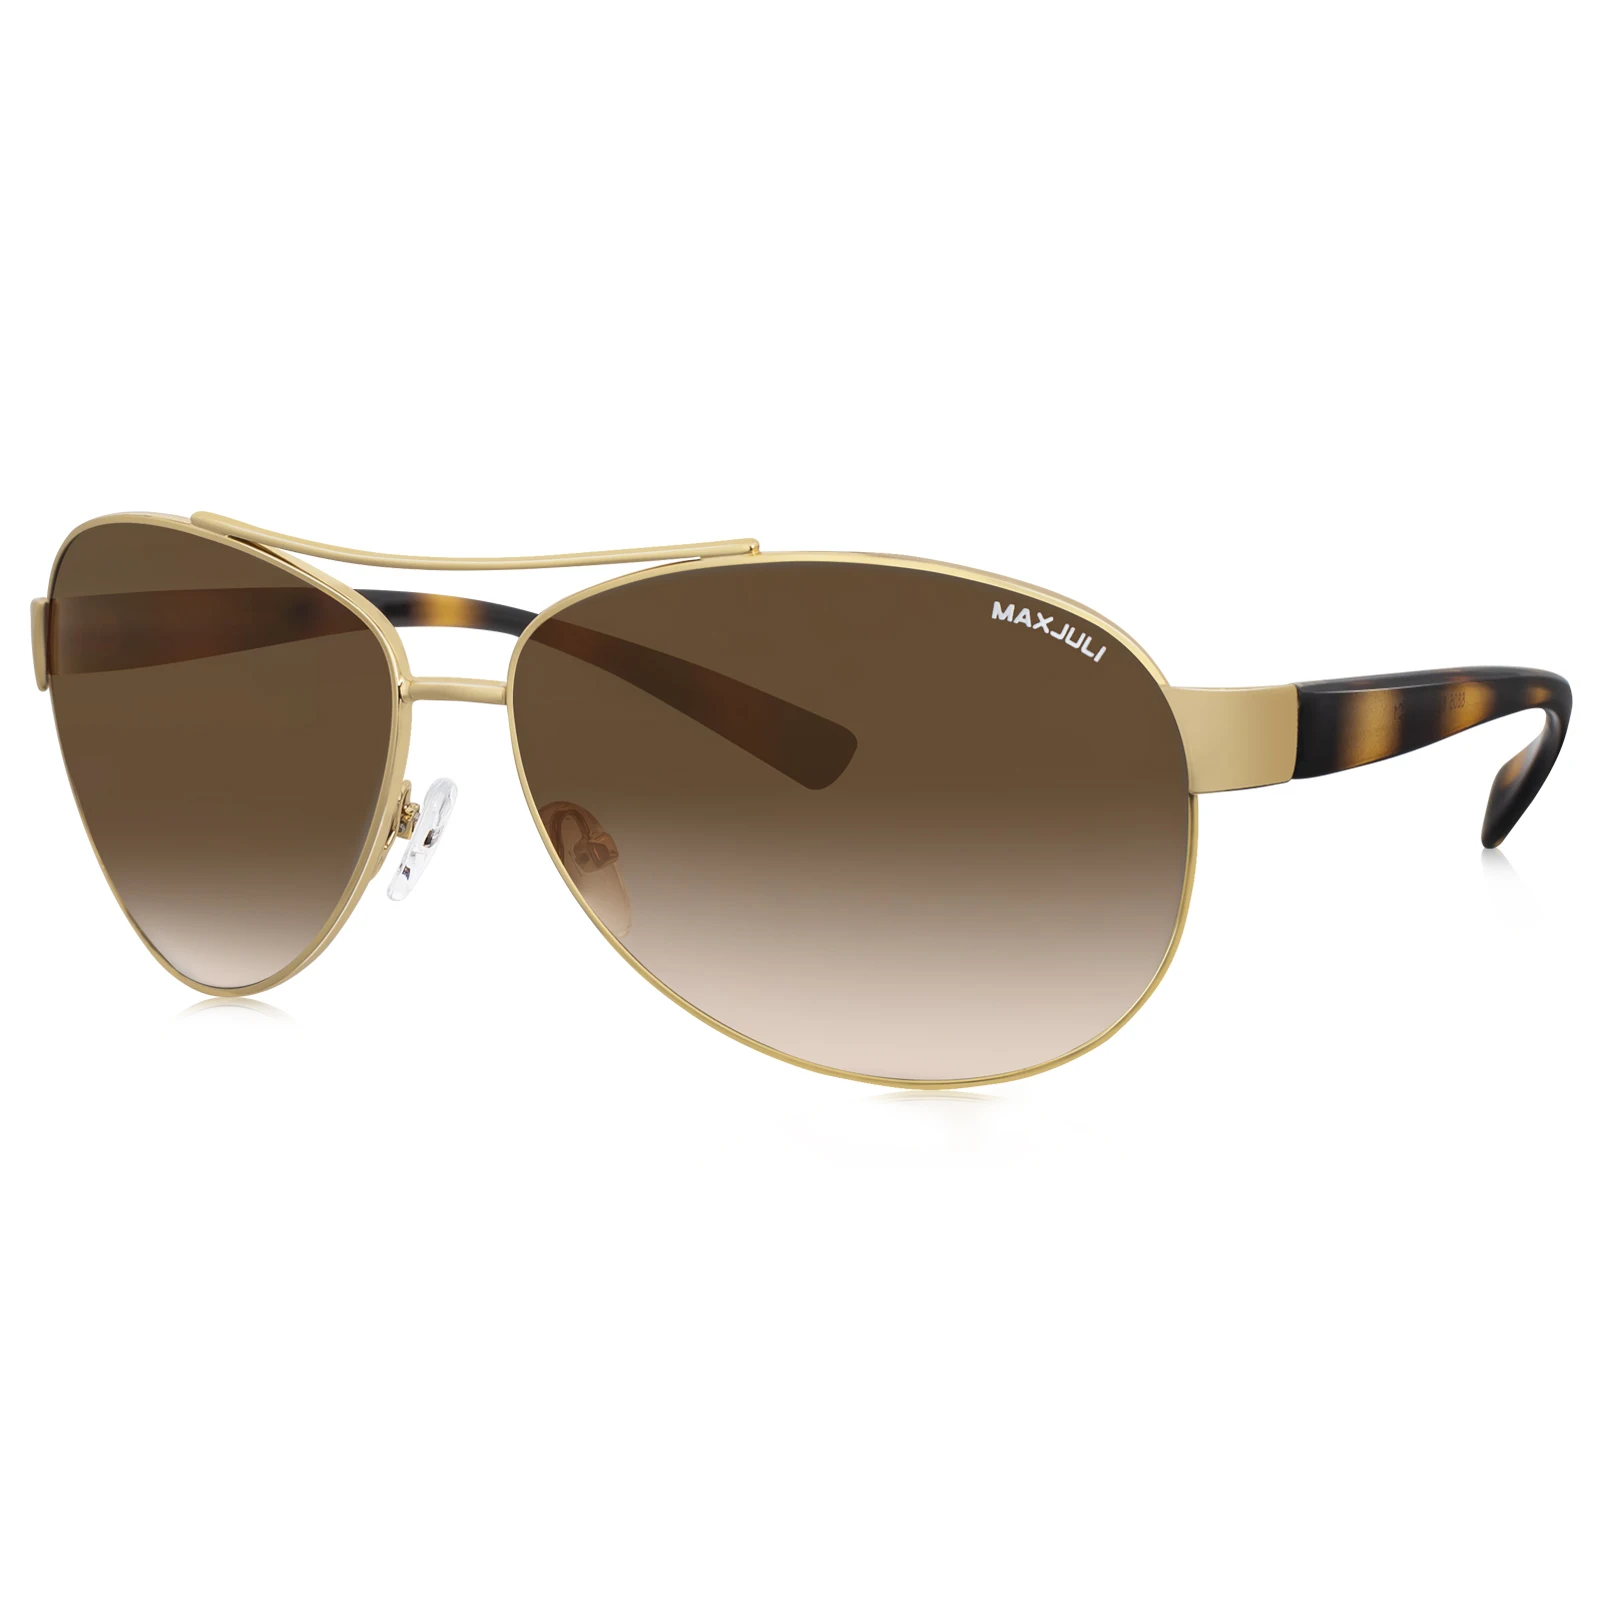 

MAXJULI Aviator Sunglasses for Men and Women,Wrap-Around UV 400 Protection Sun Glasses Gafas de sol 8805